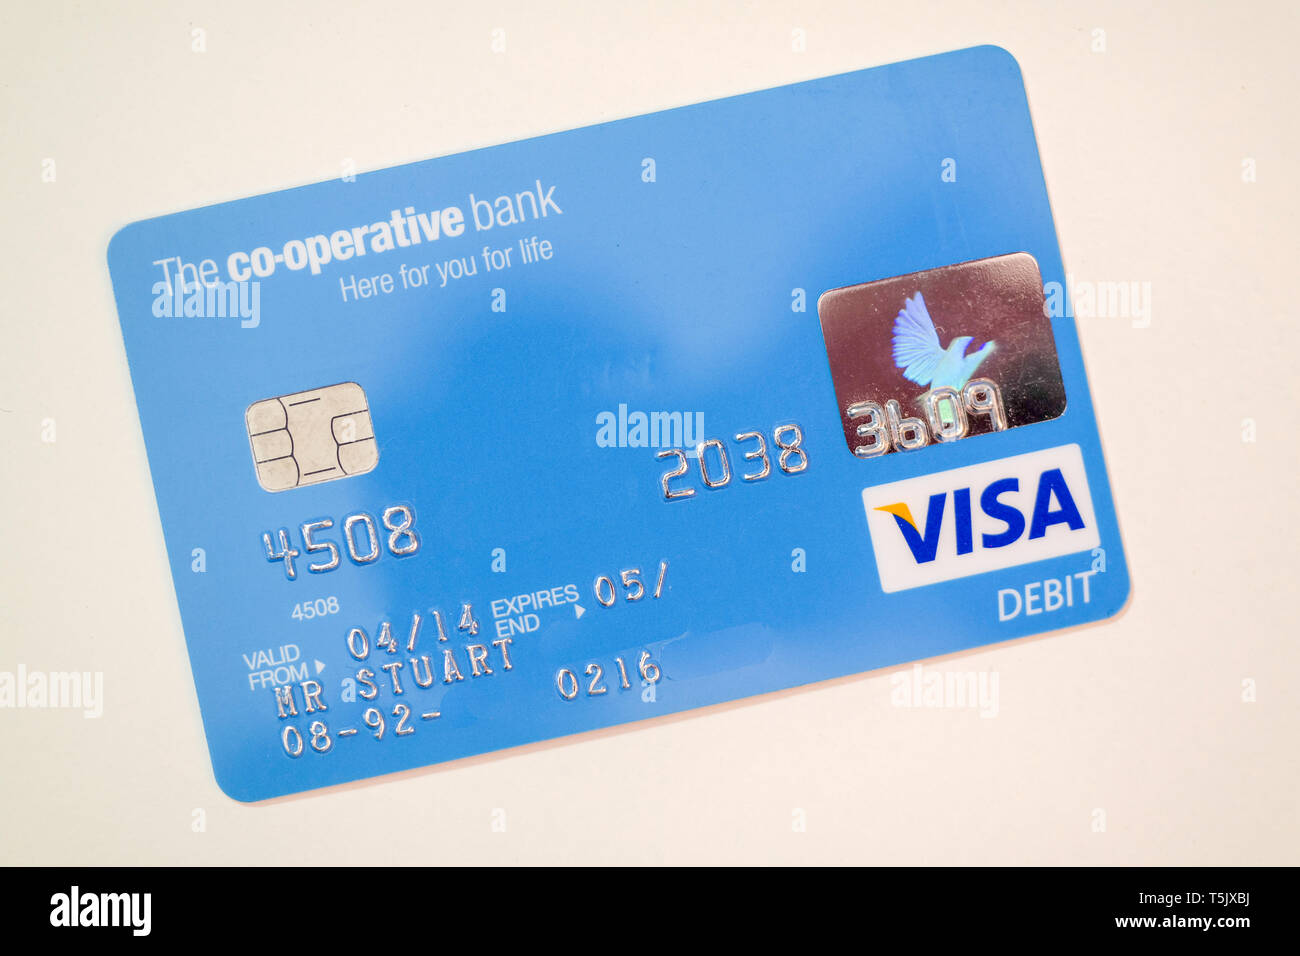 Co-operative bank card Stock Photo